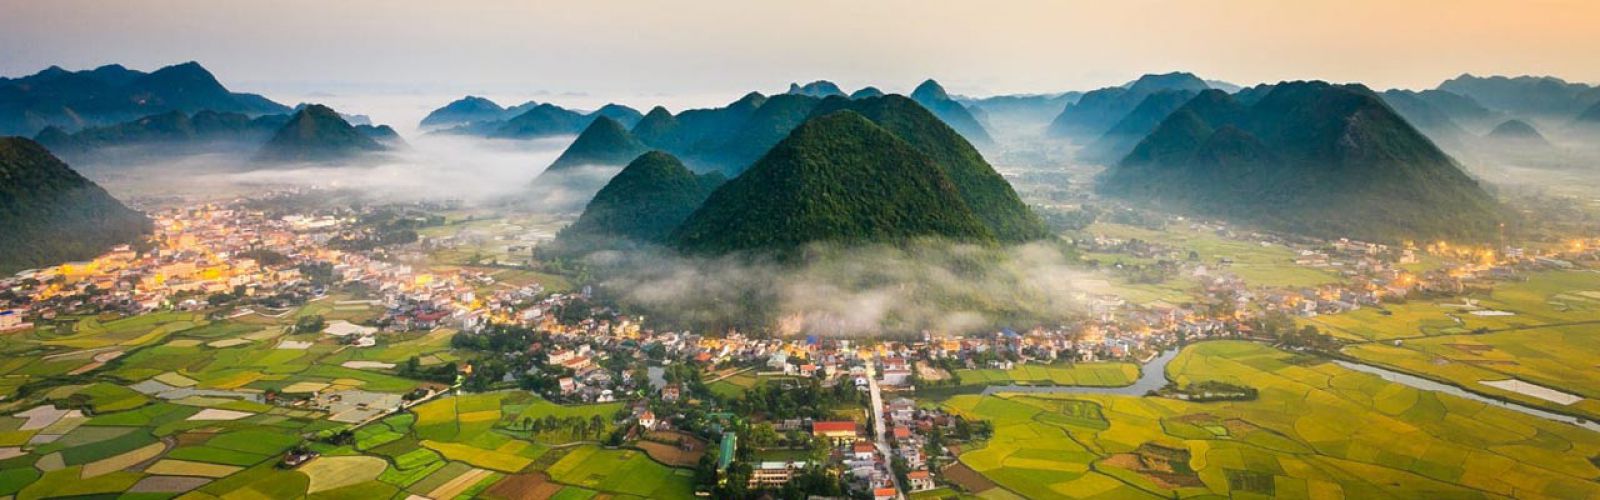 Vietnam Tours & Sightseeing